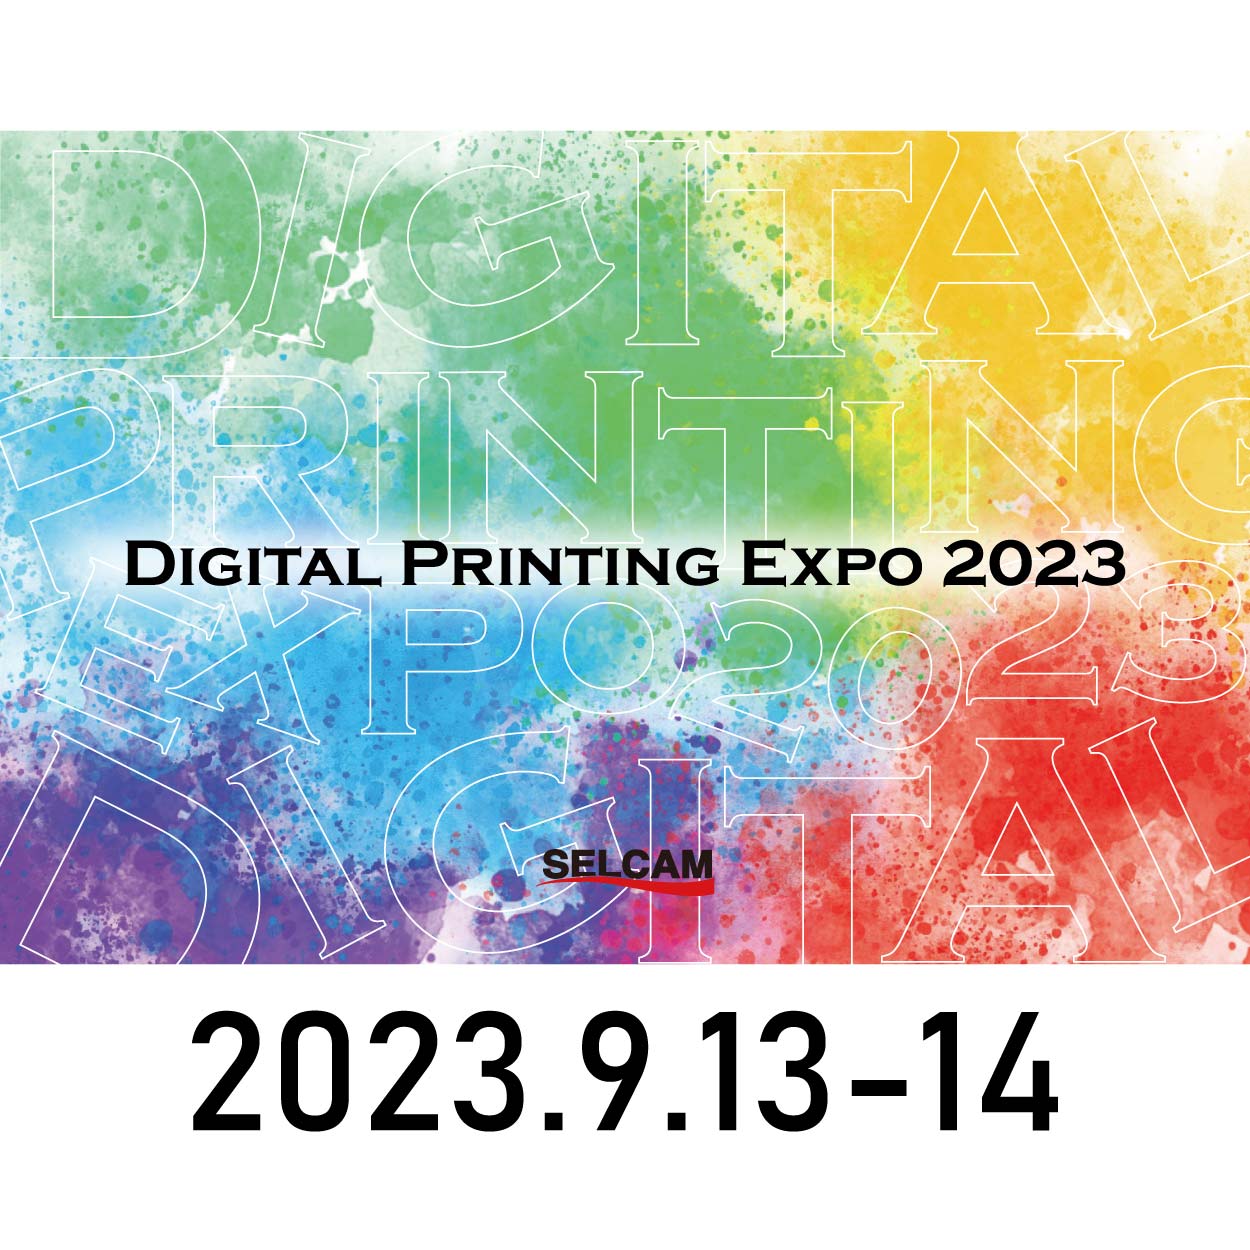 Digital Printing Expo 2023 開催のご案内